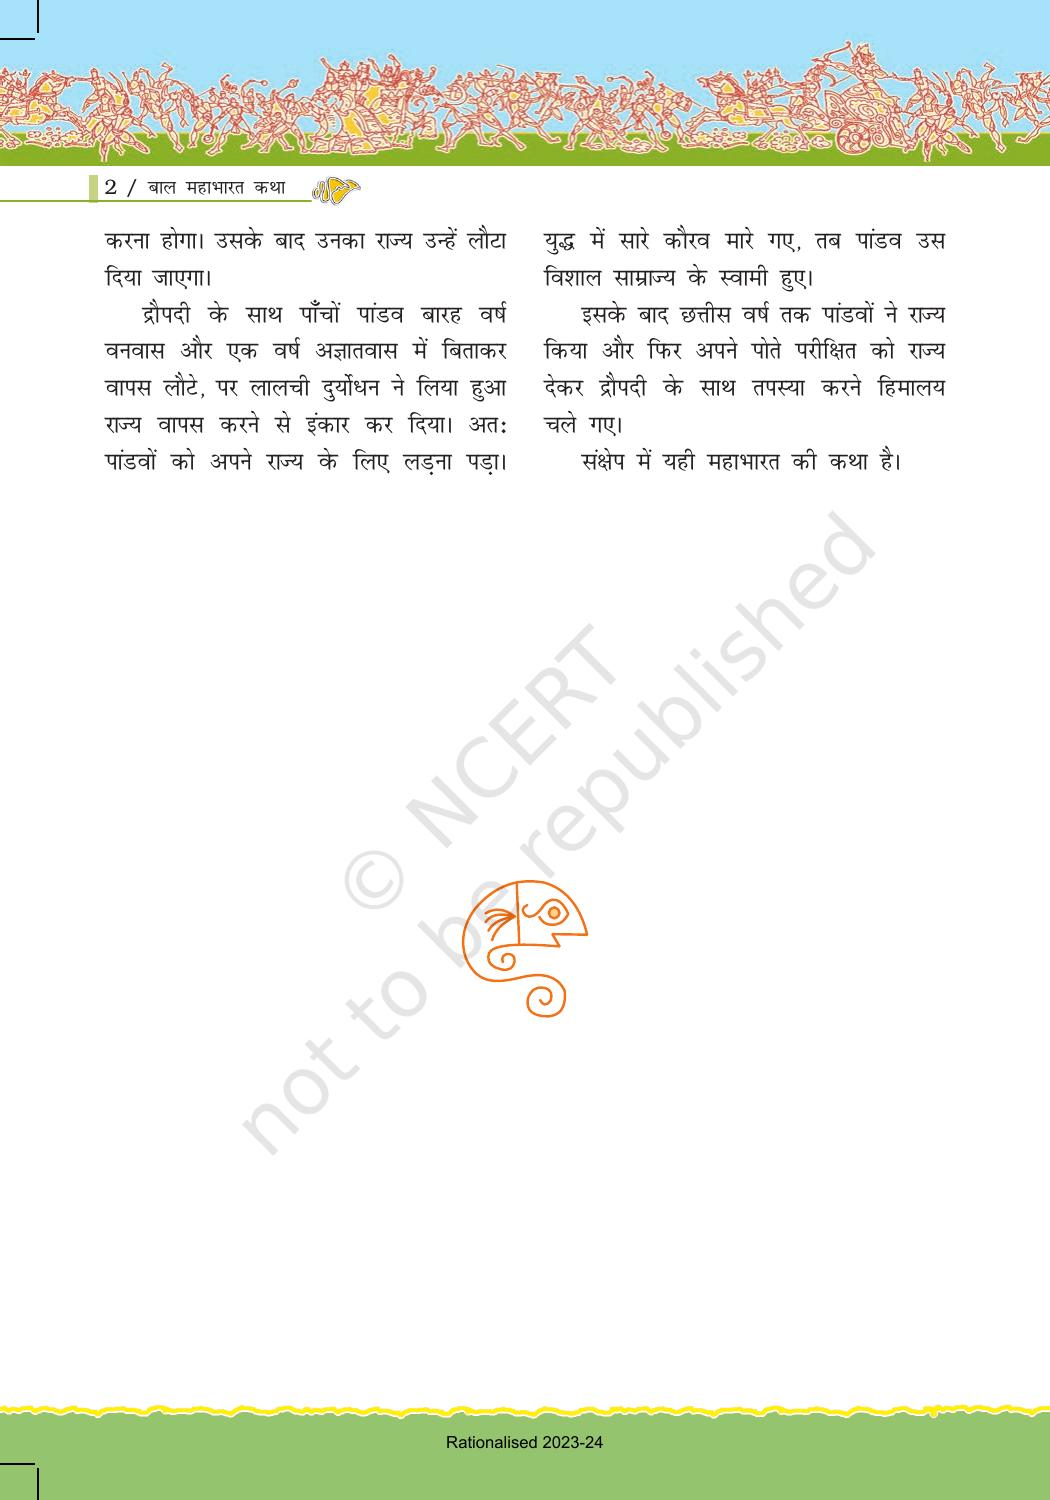 NCERT Book for Class 7 Hindi: Chapter 1-बाल महाभारत कथा - Page 2